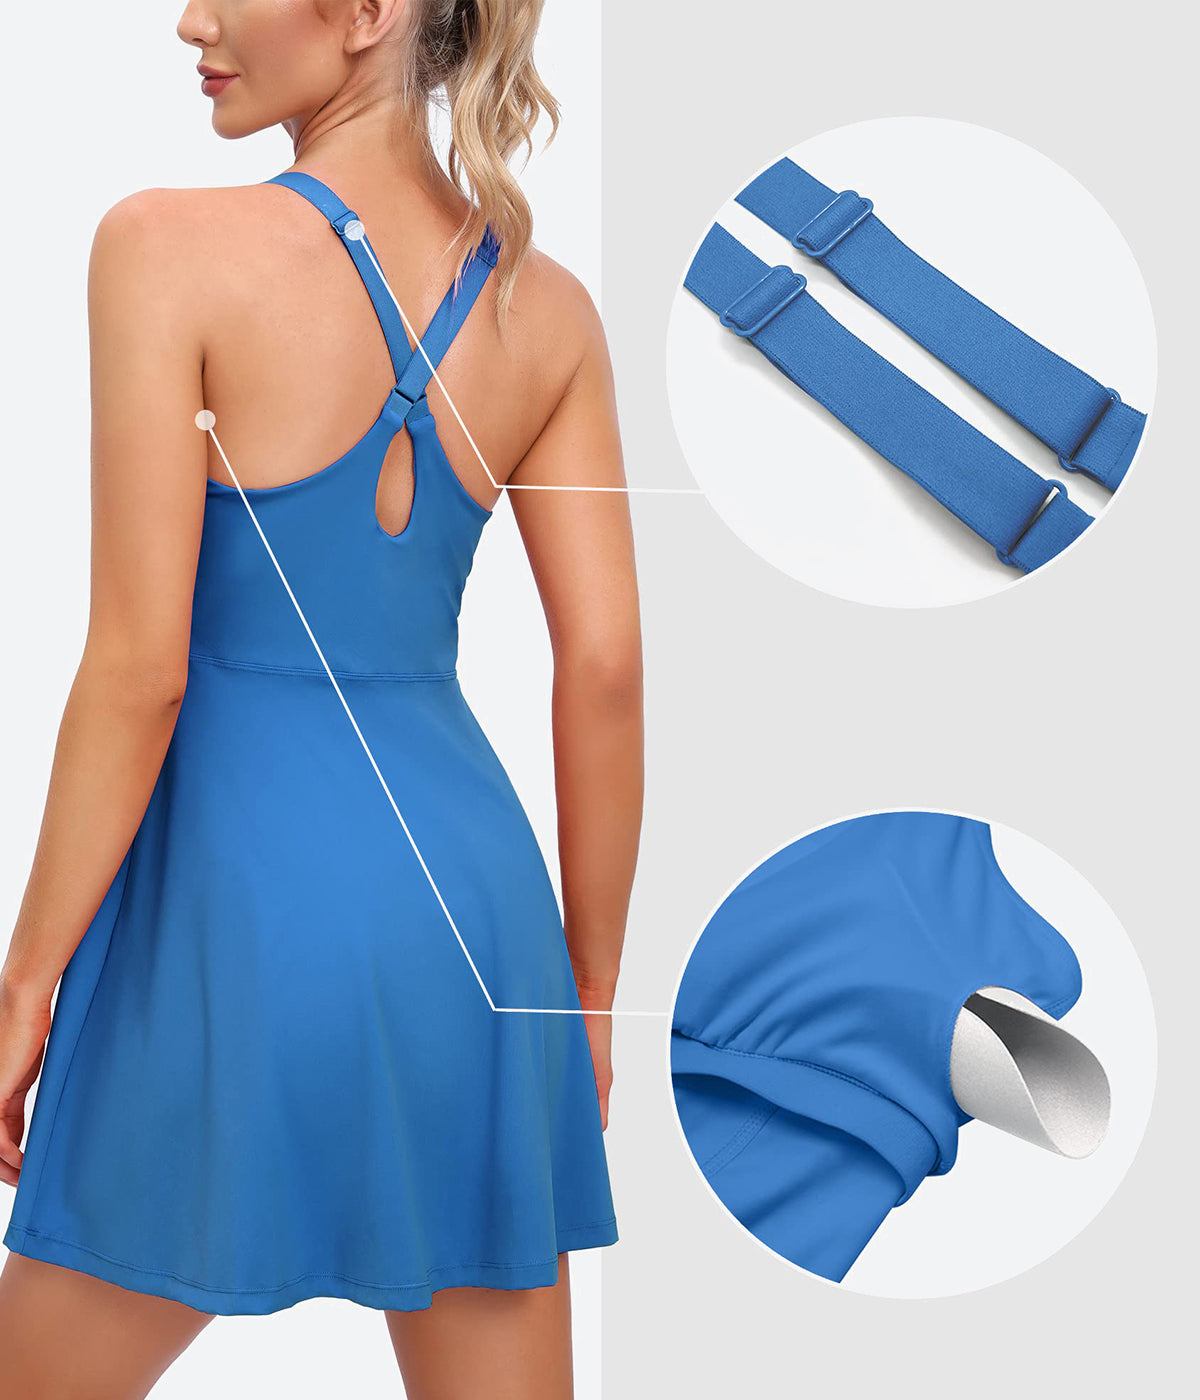 IZhansean Women s Tennis Dress Shorts Underneath Solid Color